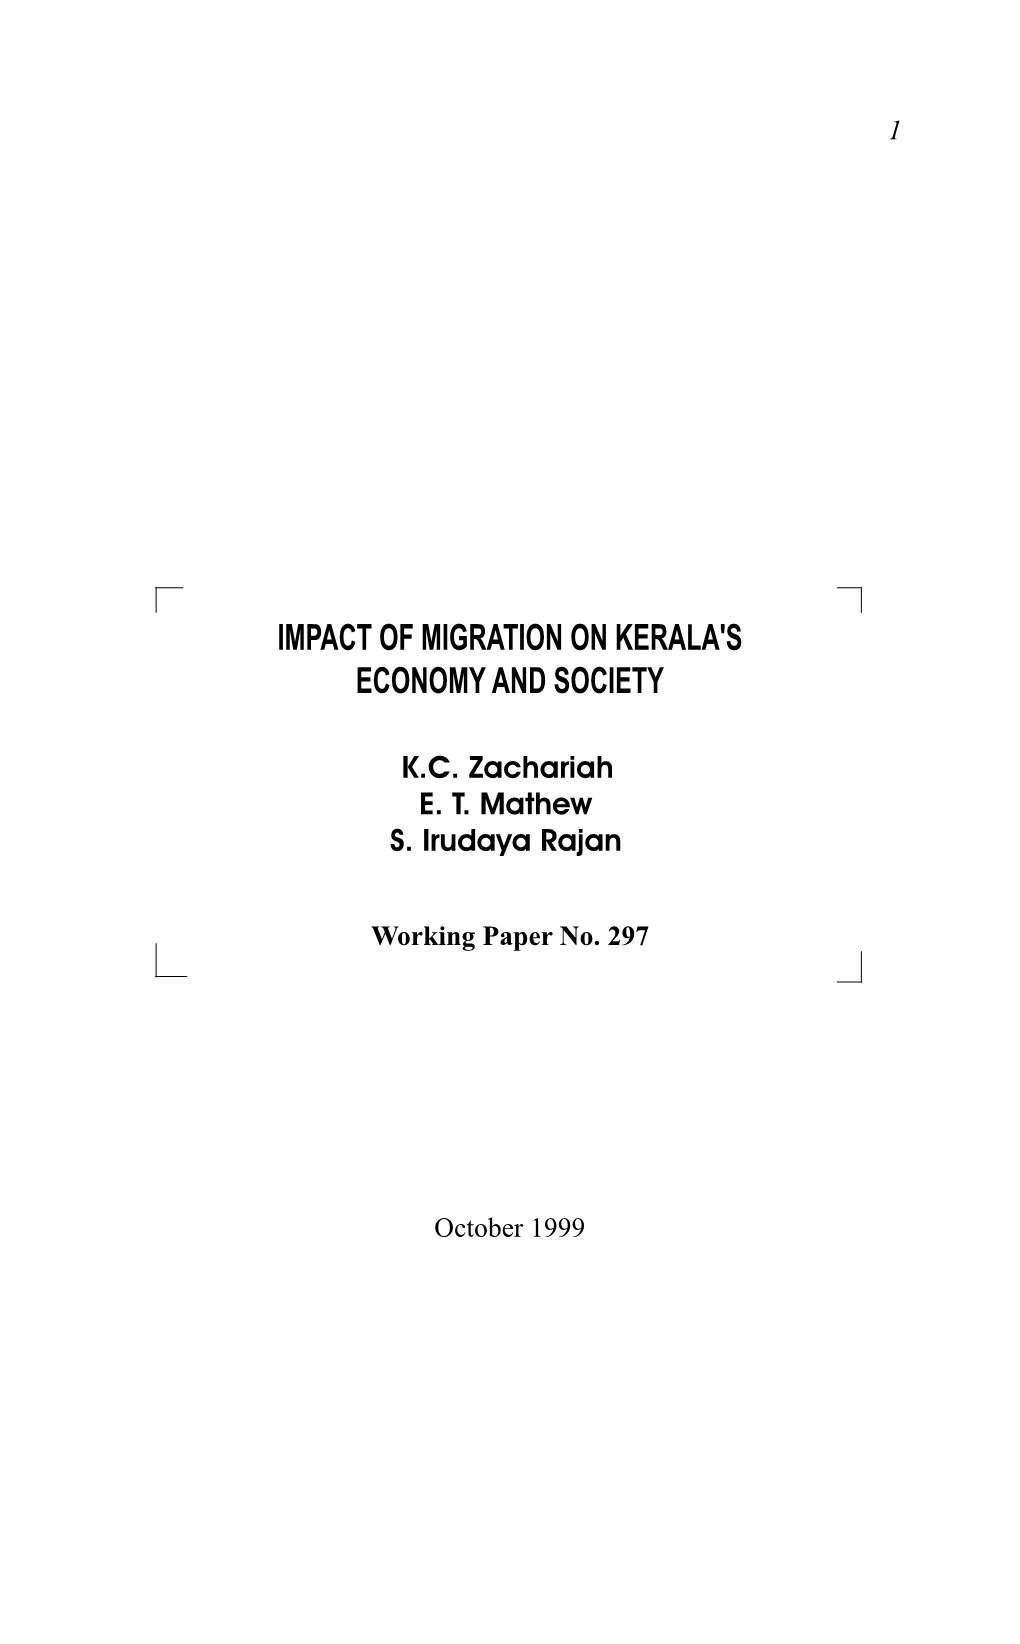 Impact of Migration on Kerala's Economy and Society